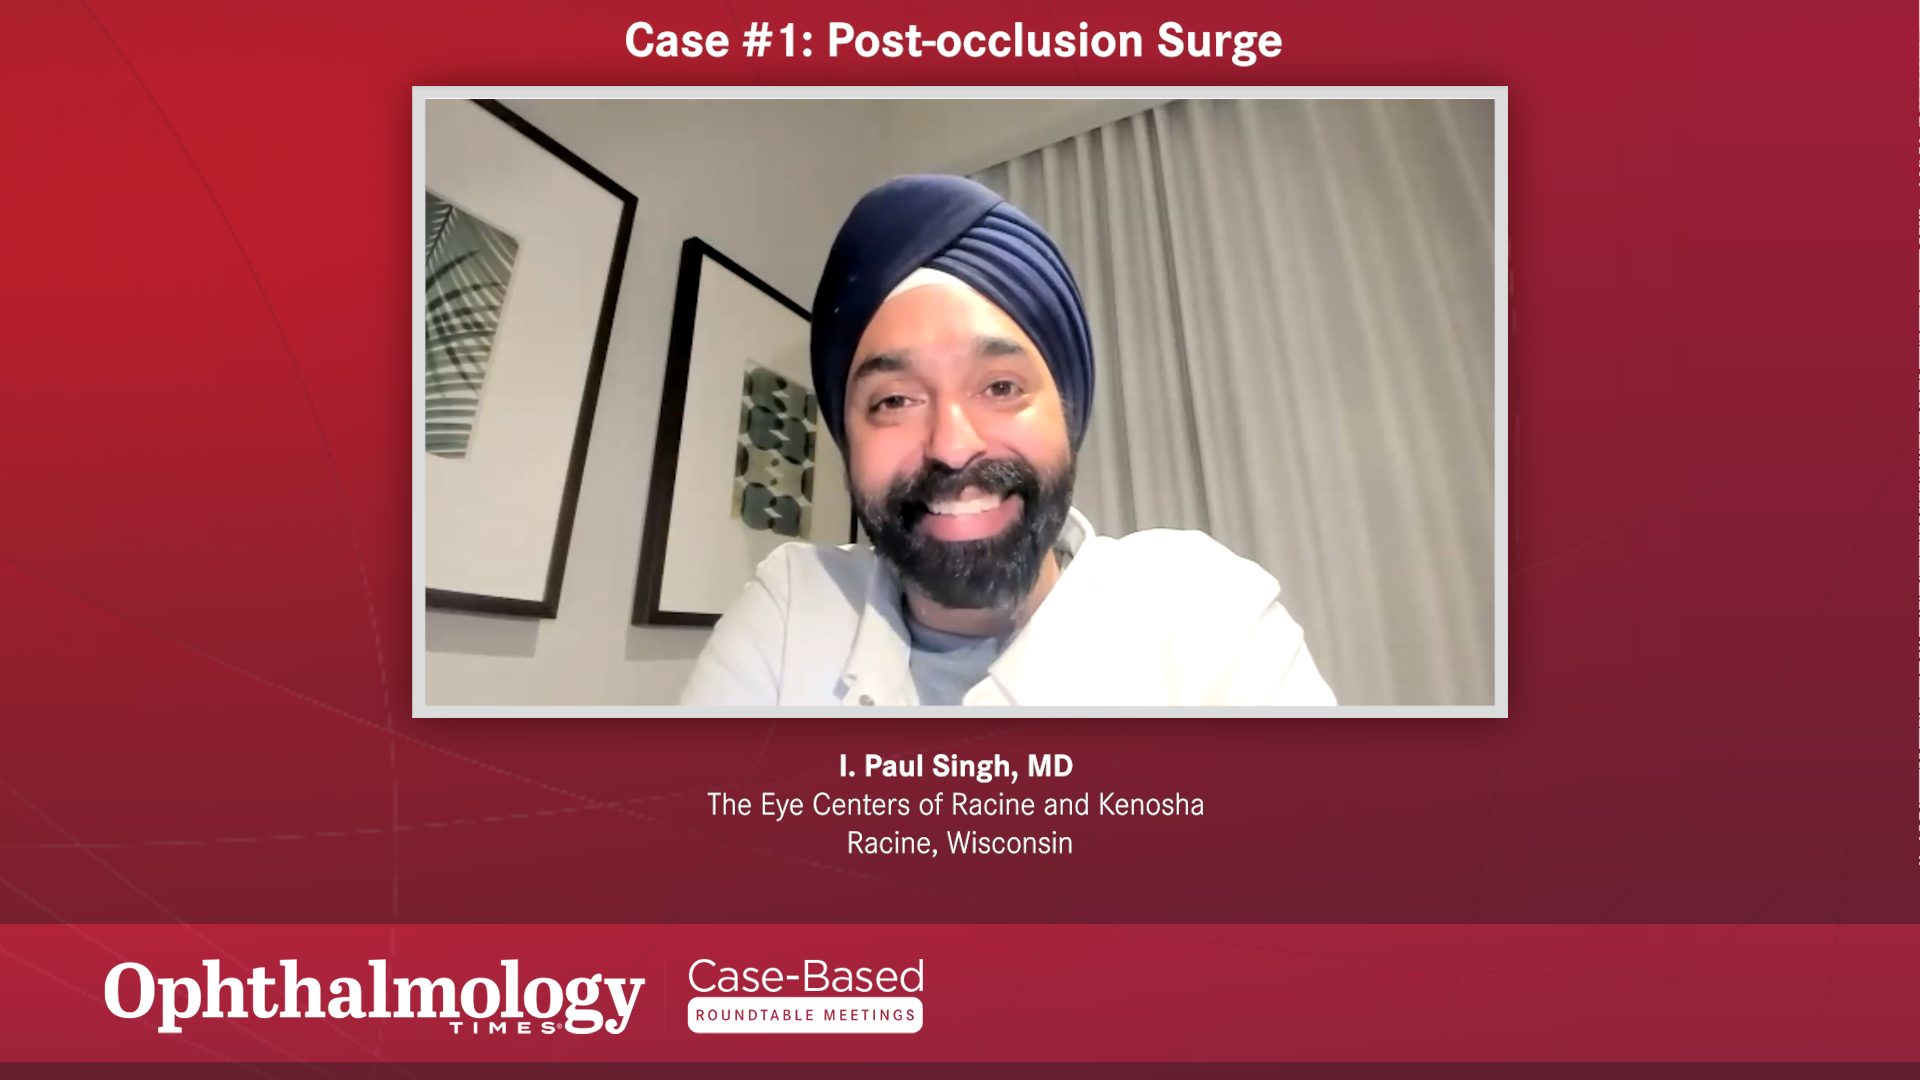 Case #1: Post-occlusion Surge